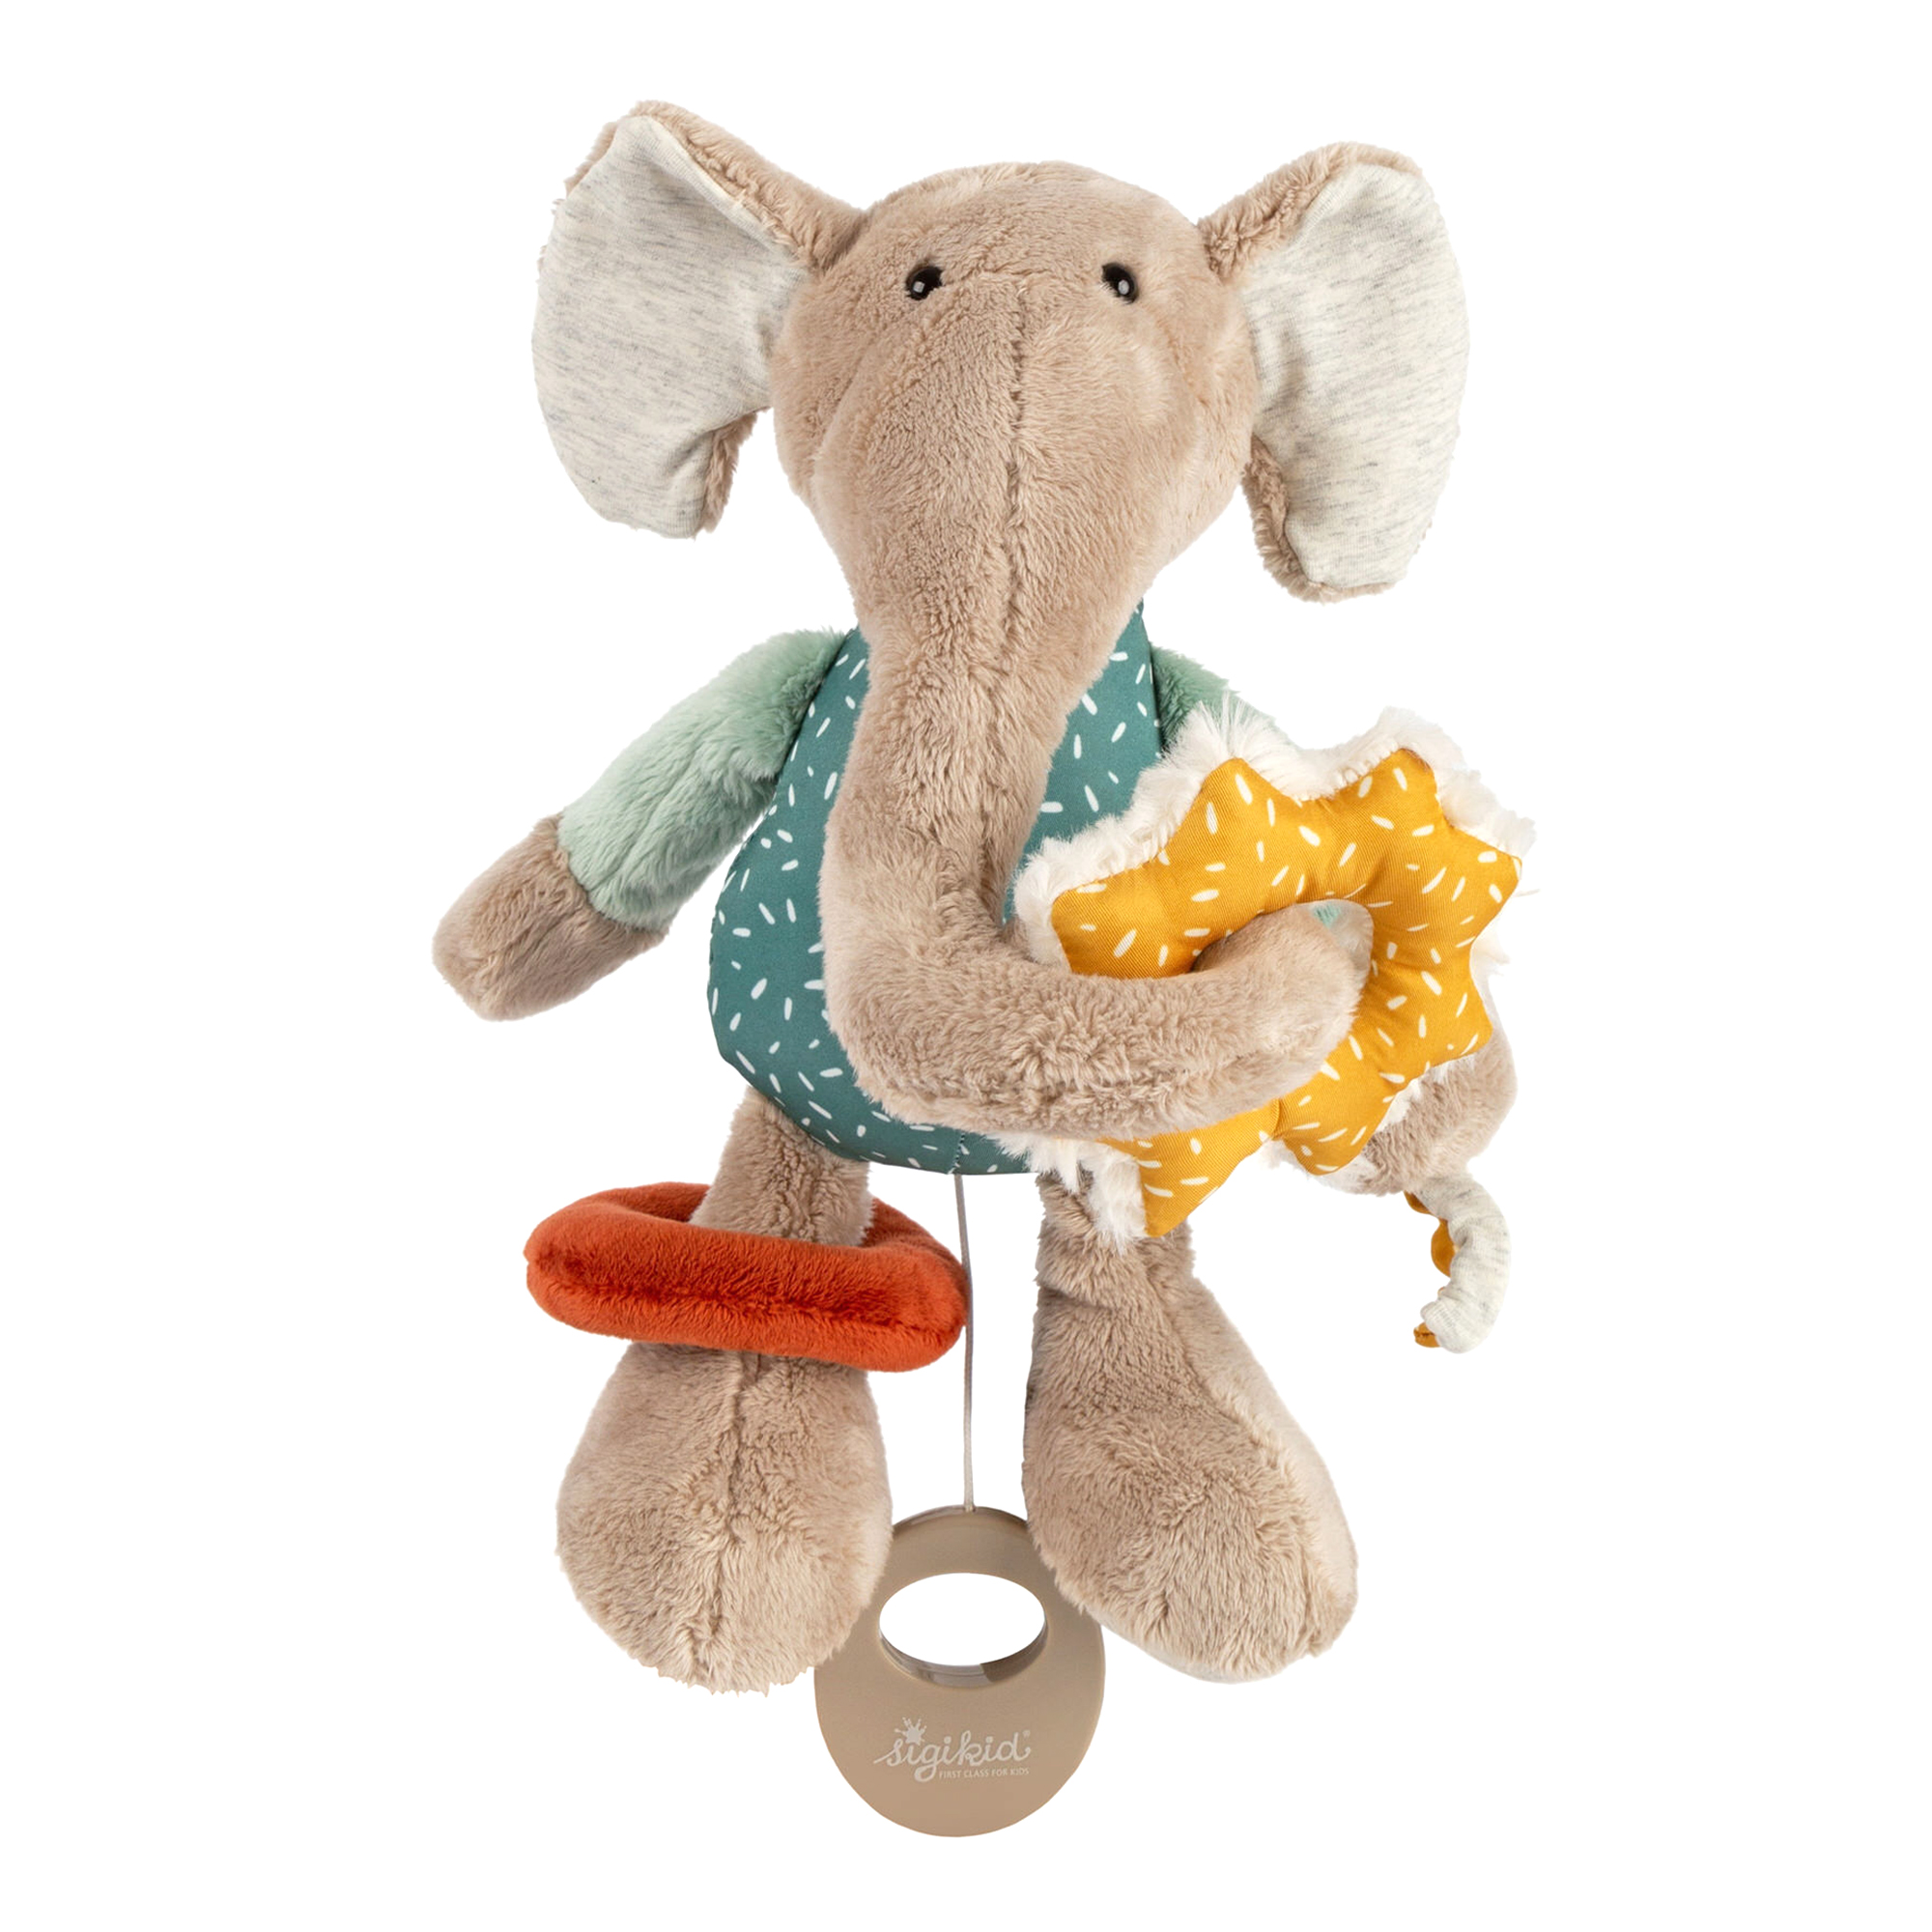 Musical activity soft toy elephant